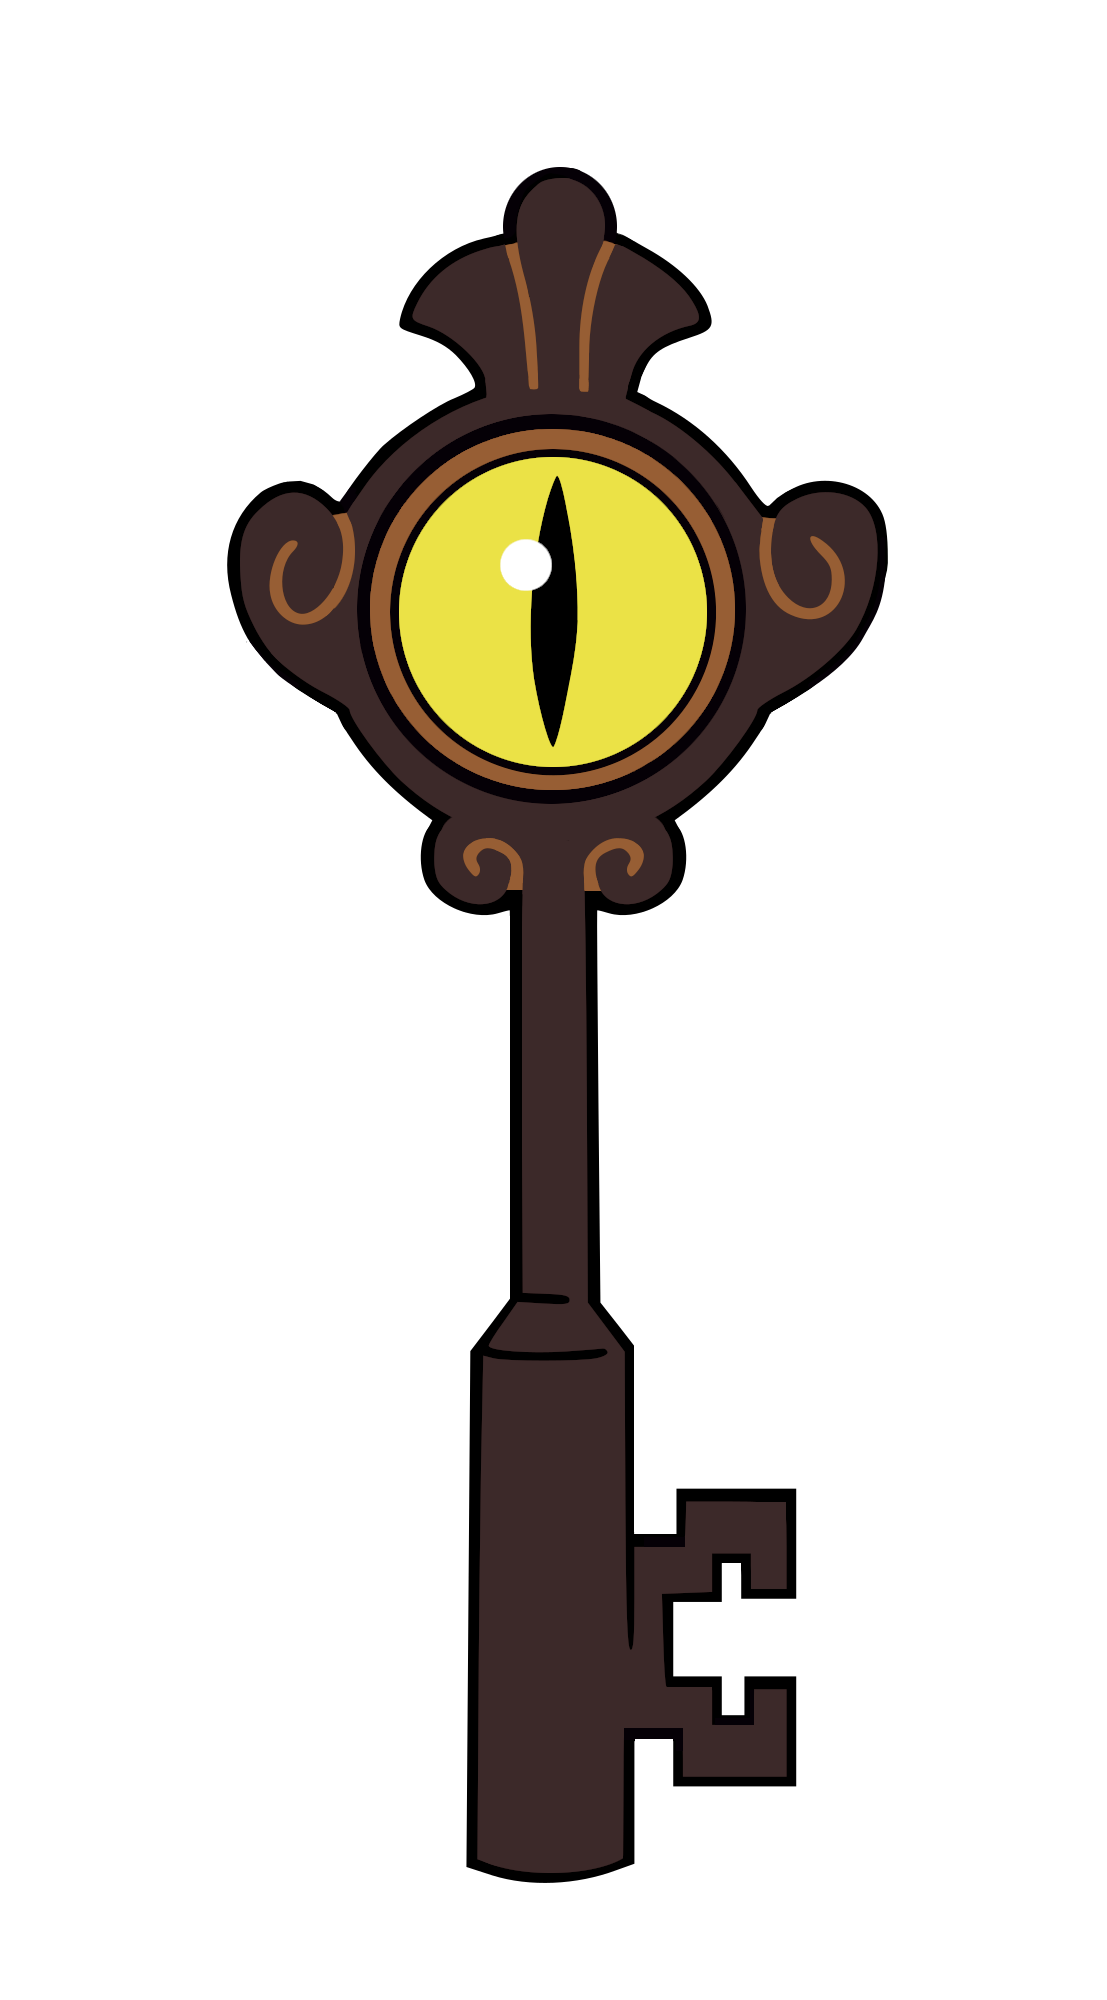 Portal Key, The Owl House Wiki